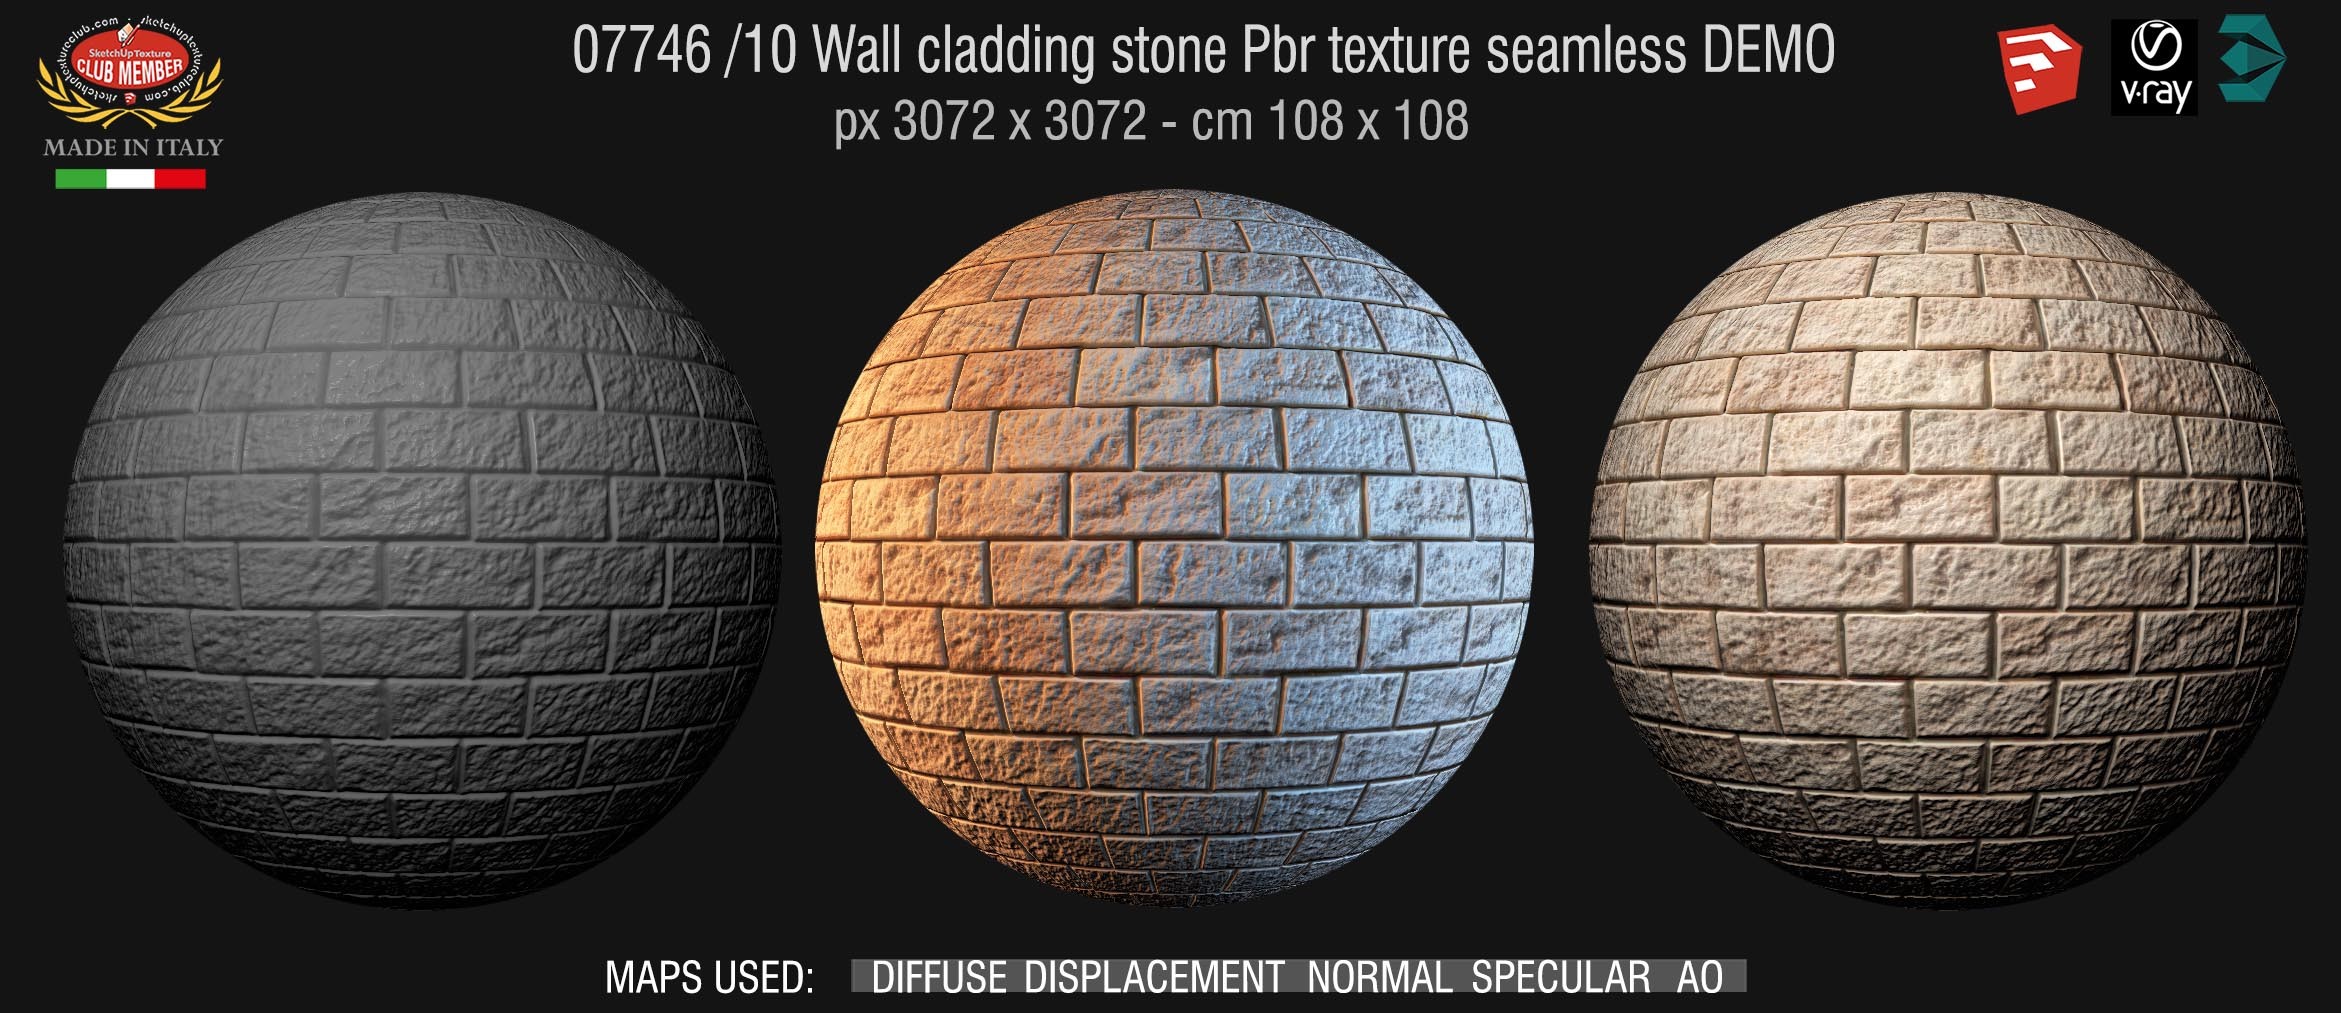 07745/10 Wall cladding stone pbr texture seamless demo